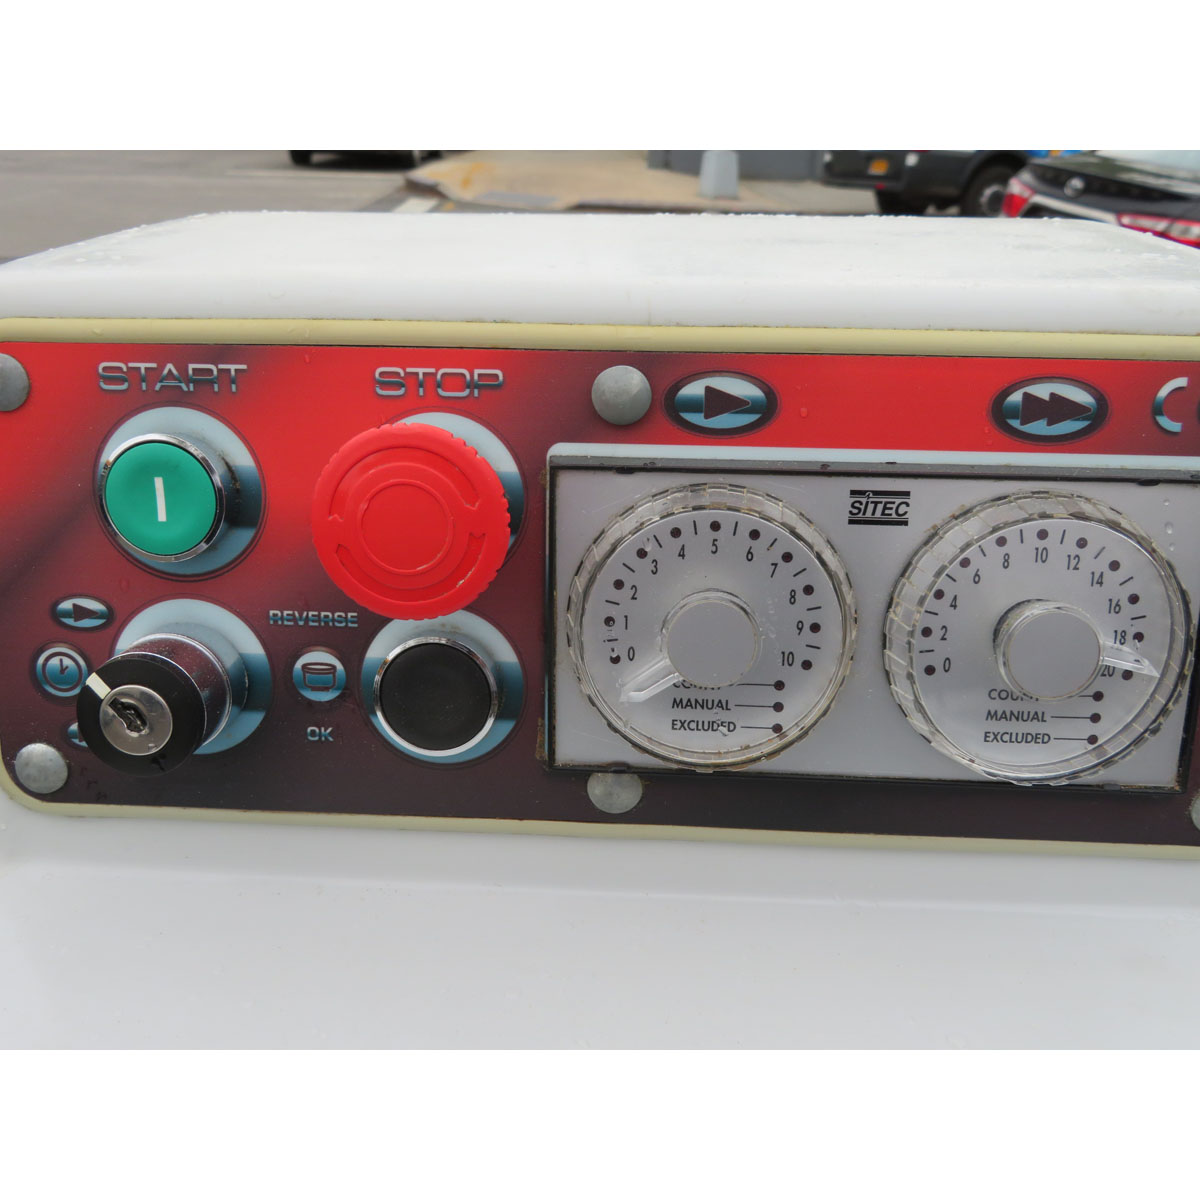 Univex SSL-50 Spiral Mixer 70 Quart, Used Excellent Condition image 1